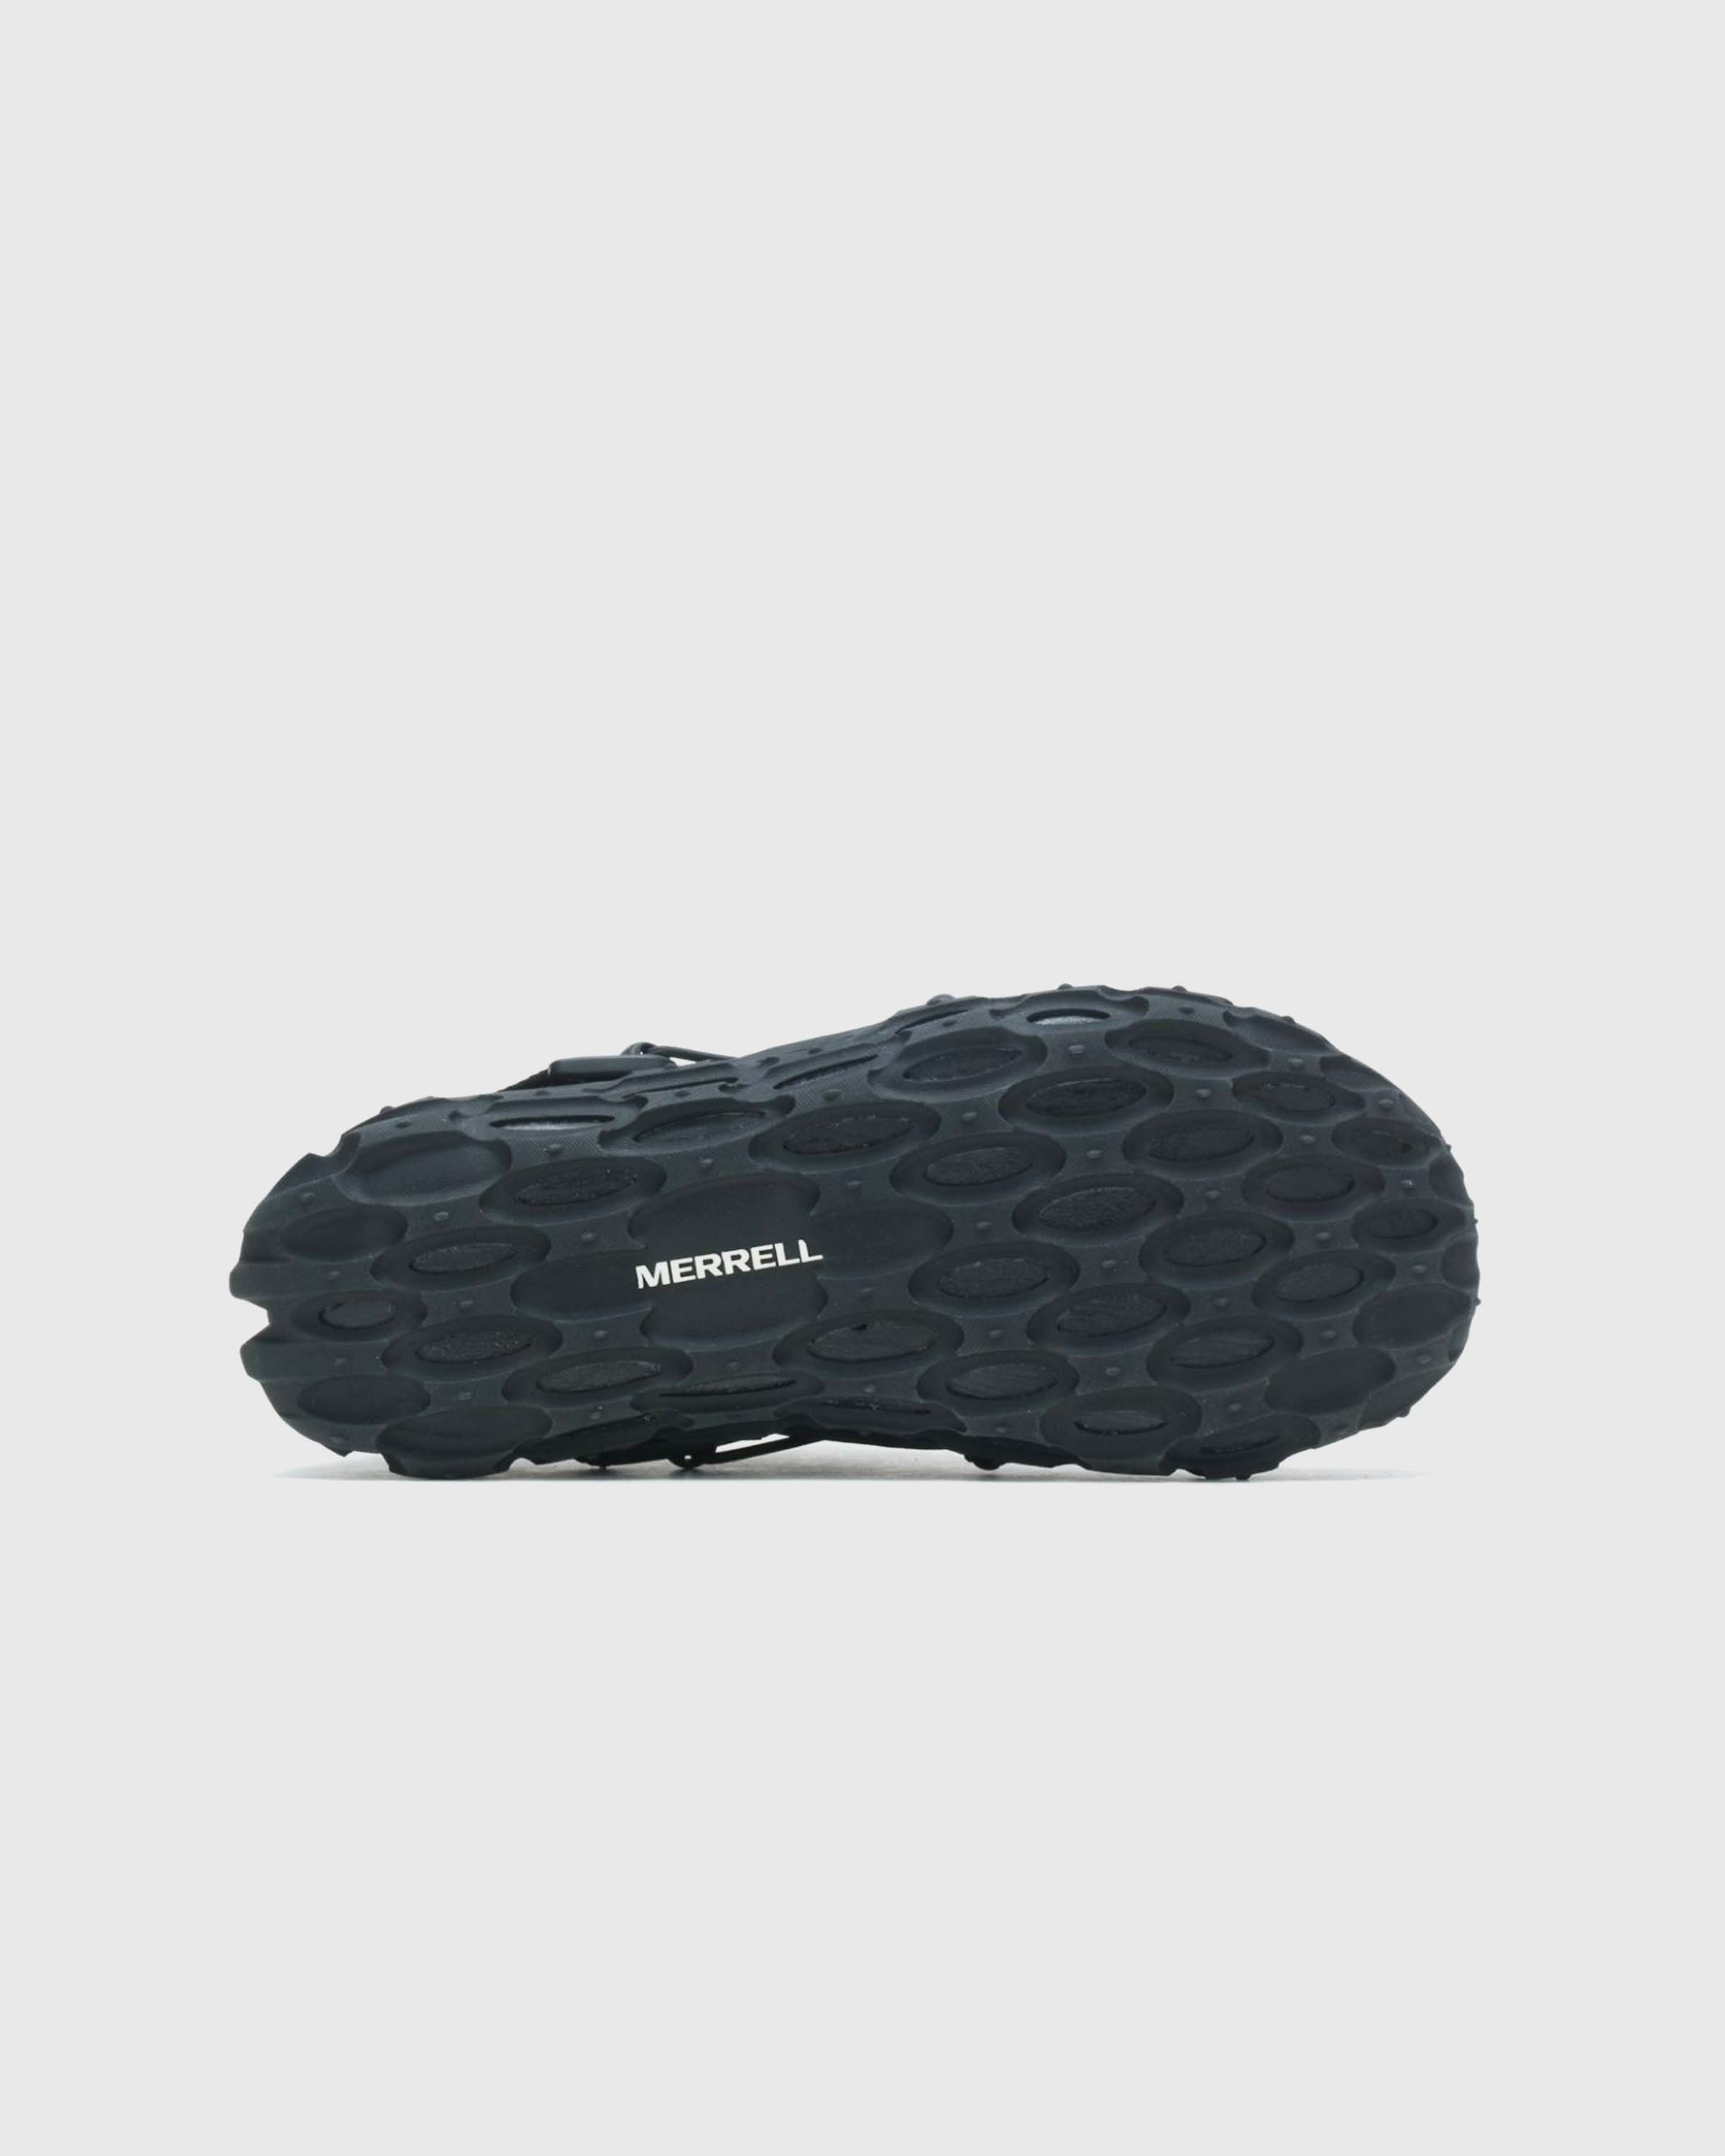 Merrell - Hydro Moc AT Ripstop 1TRL Black - Footwear - Black - Image 6